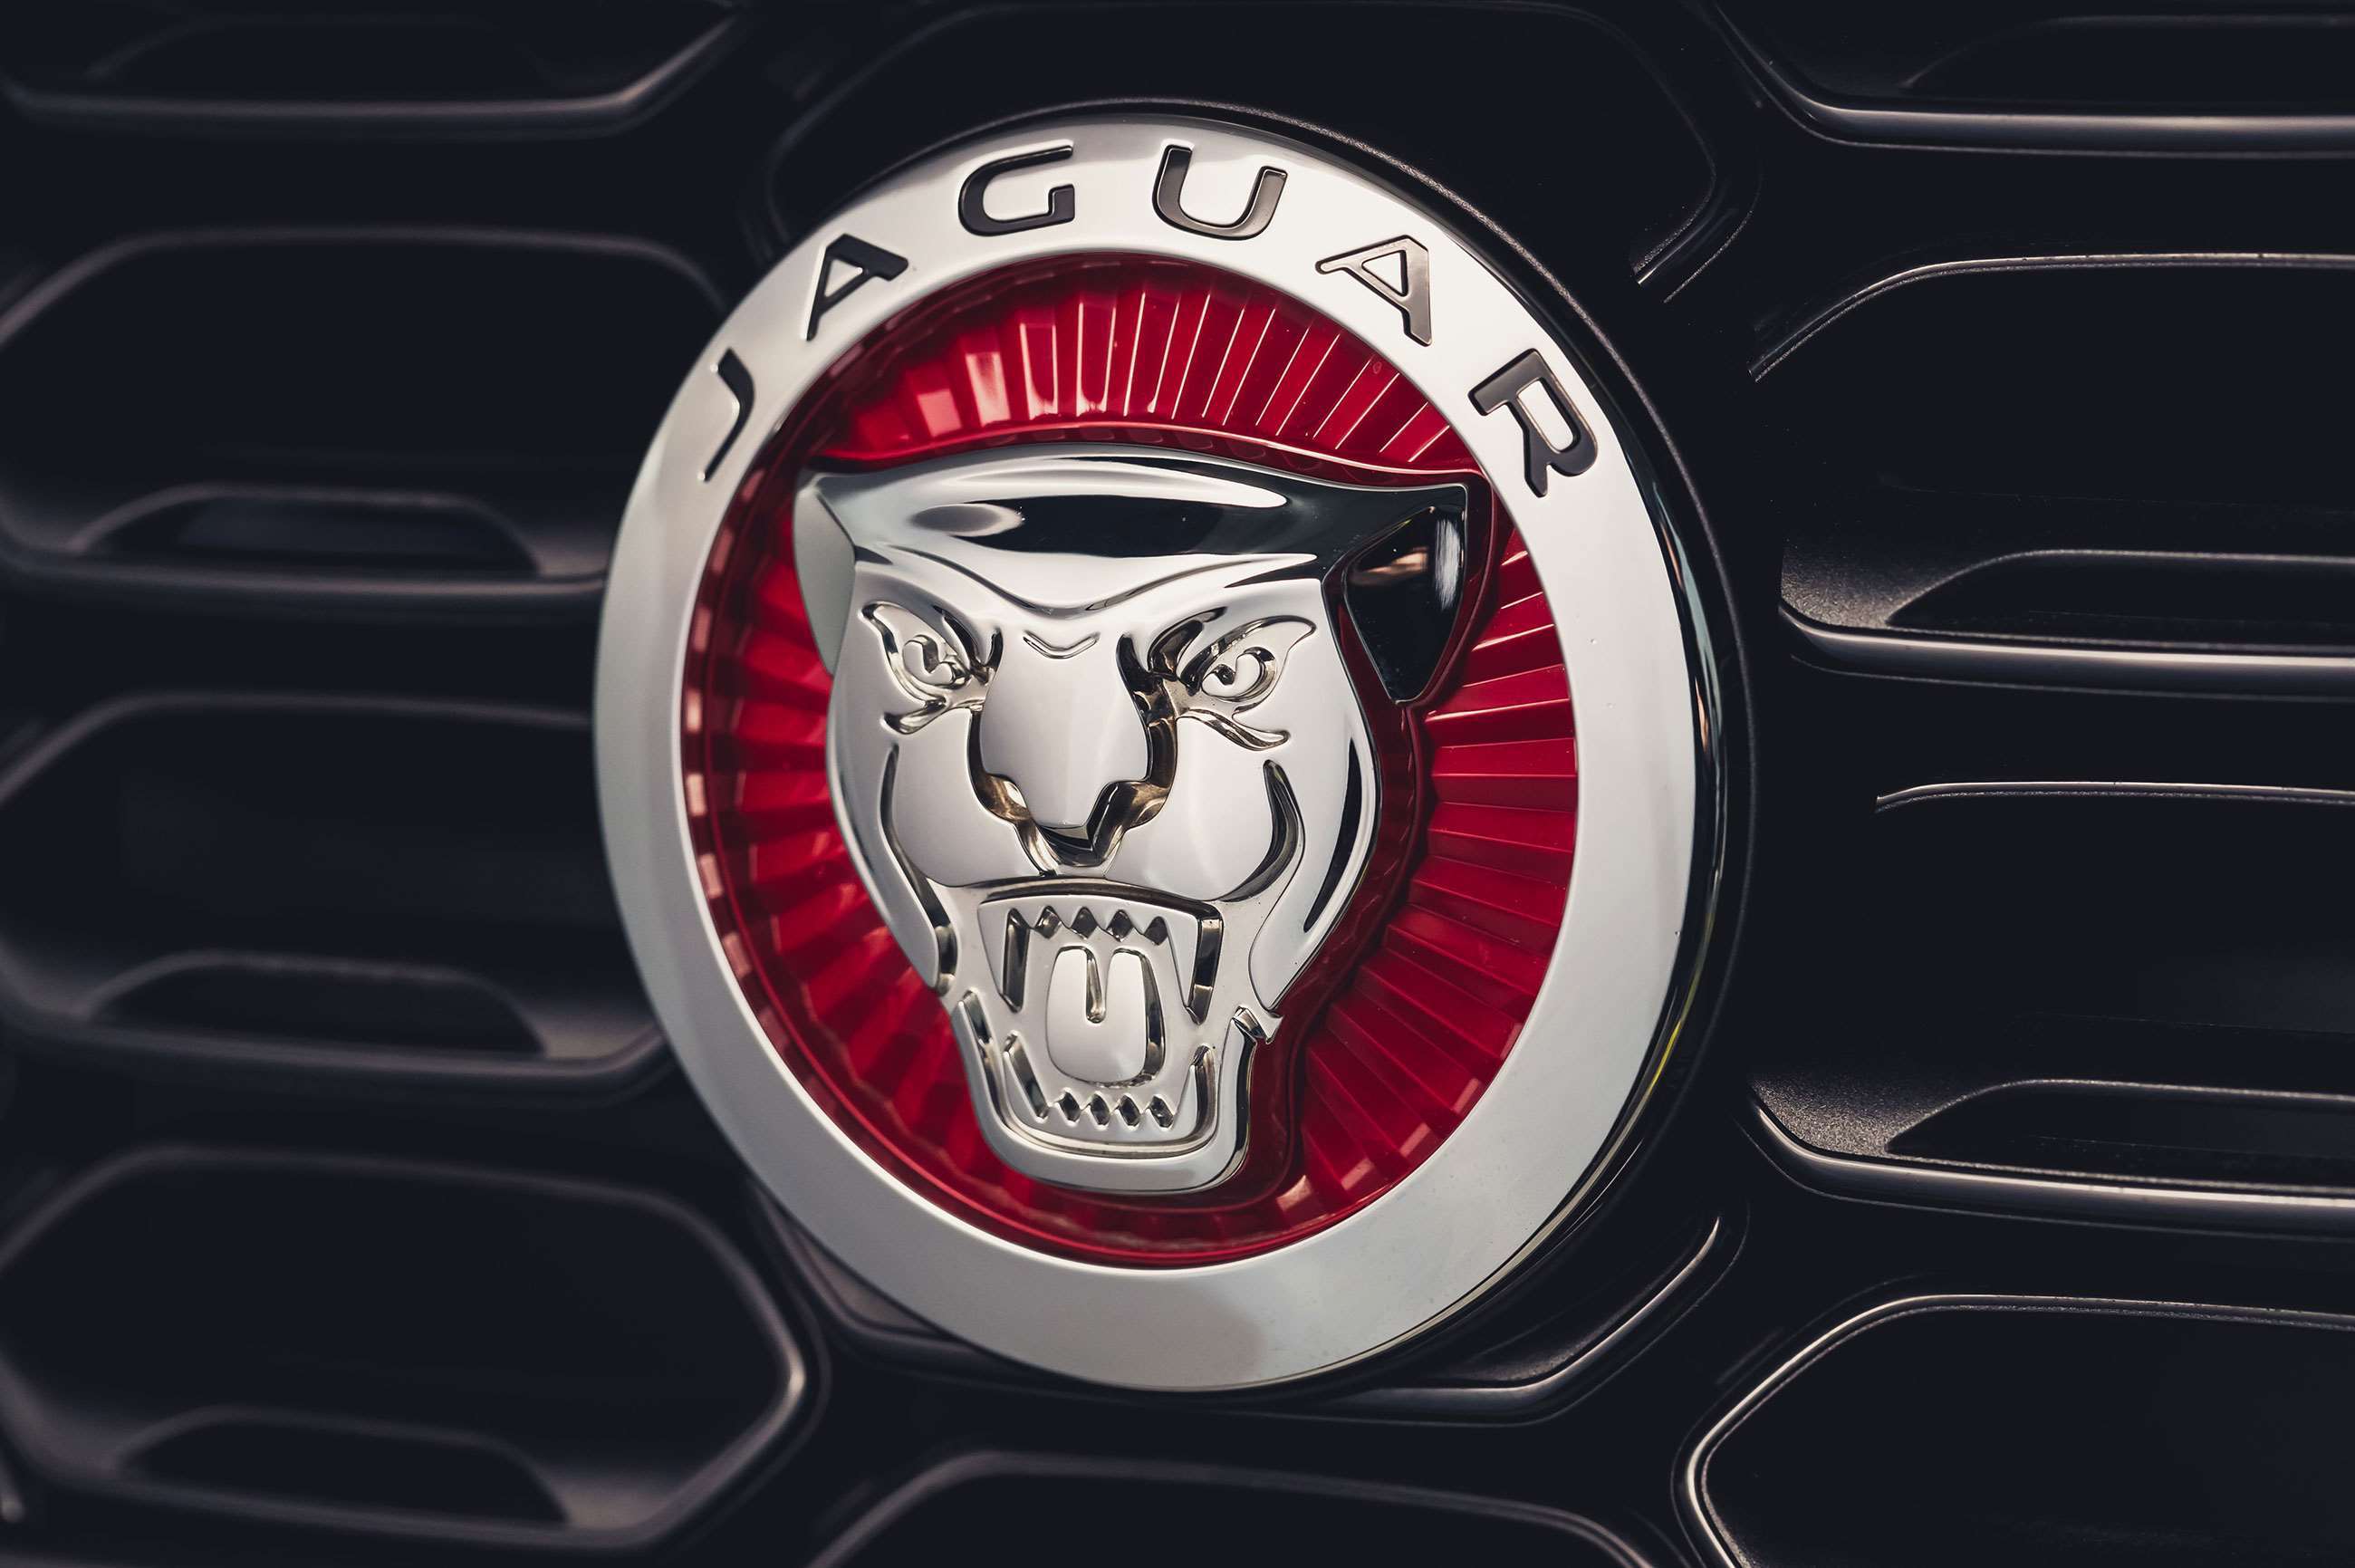 julian-thomson-jaguar-design-goodwood-27082020.jpg